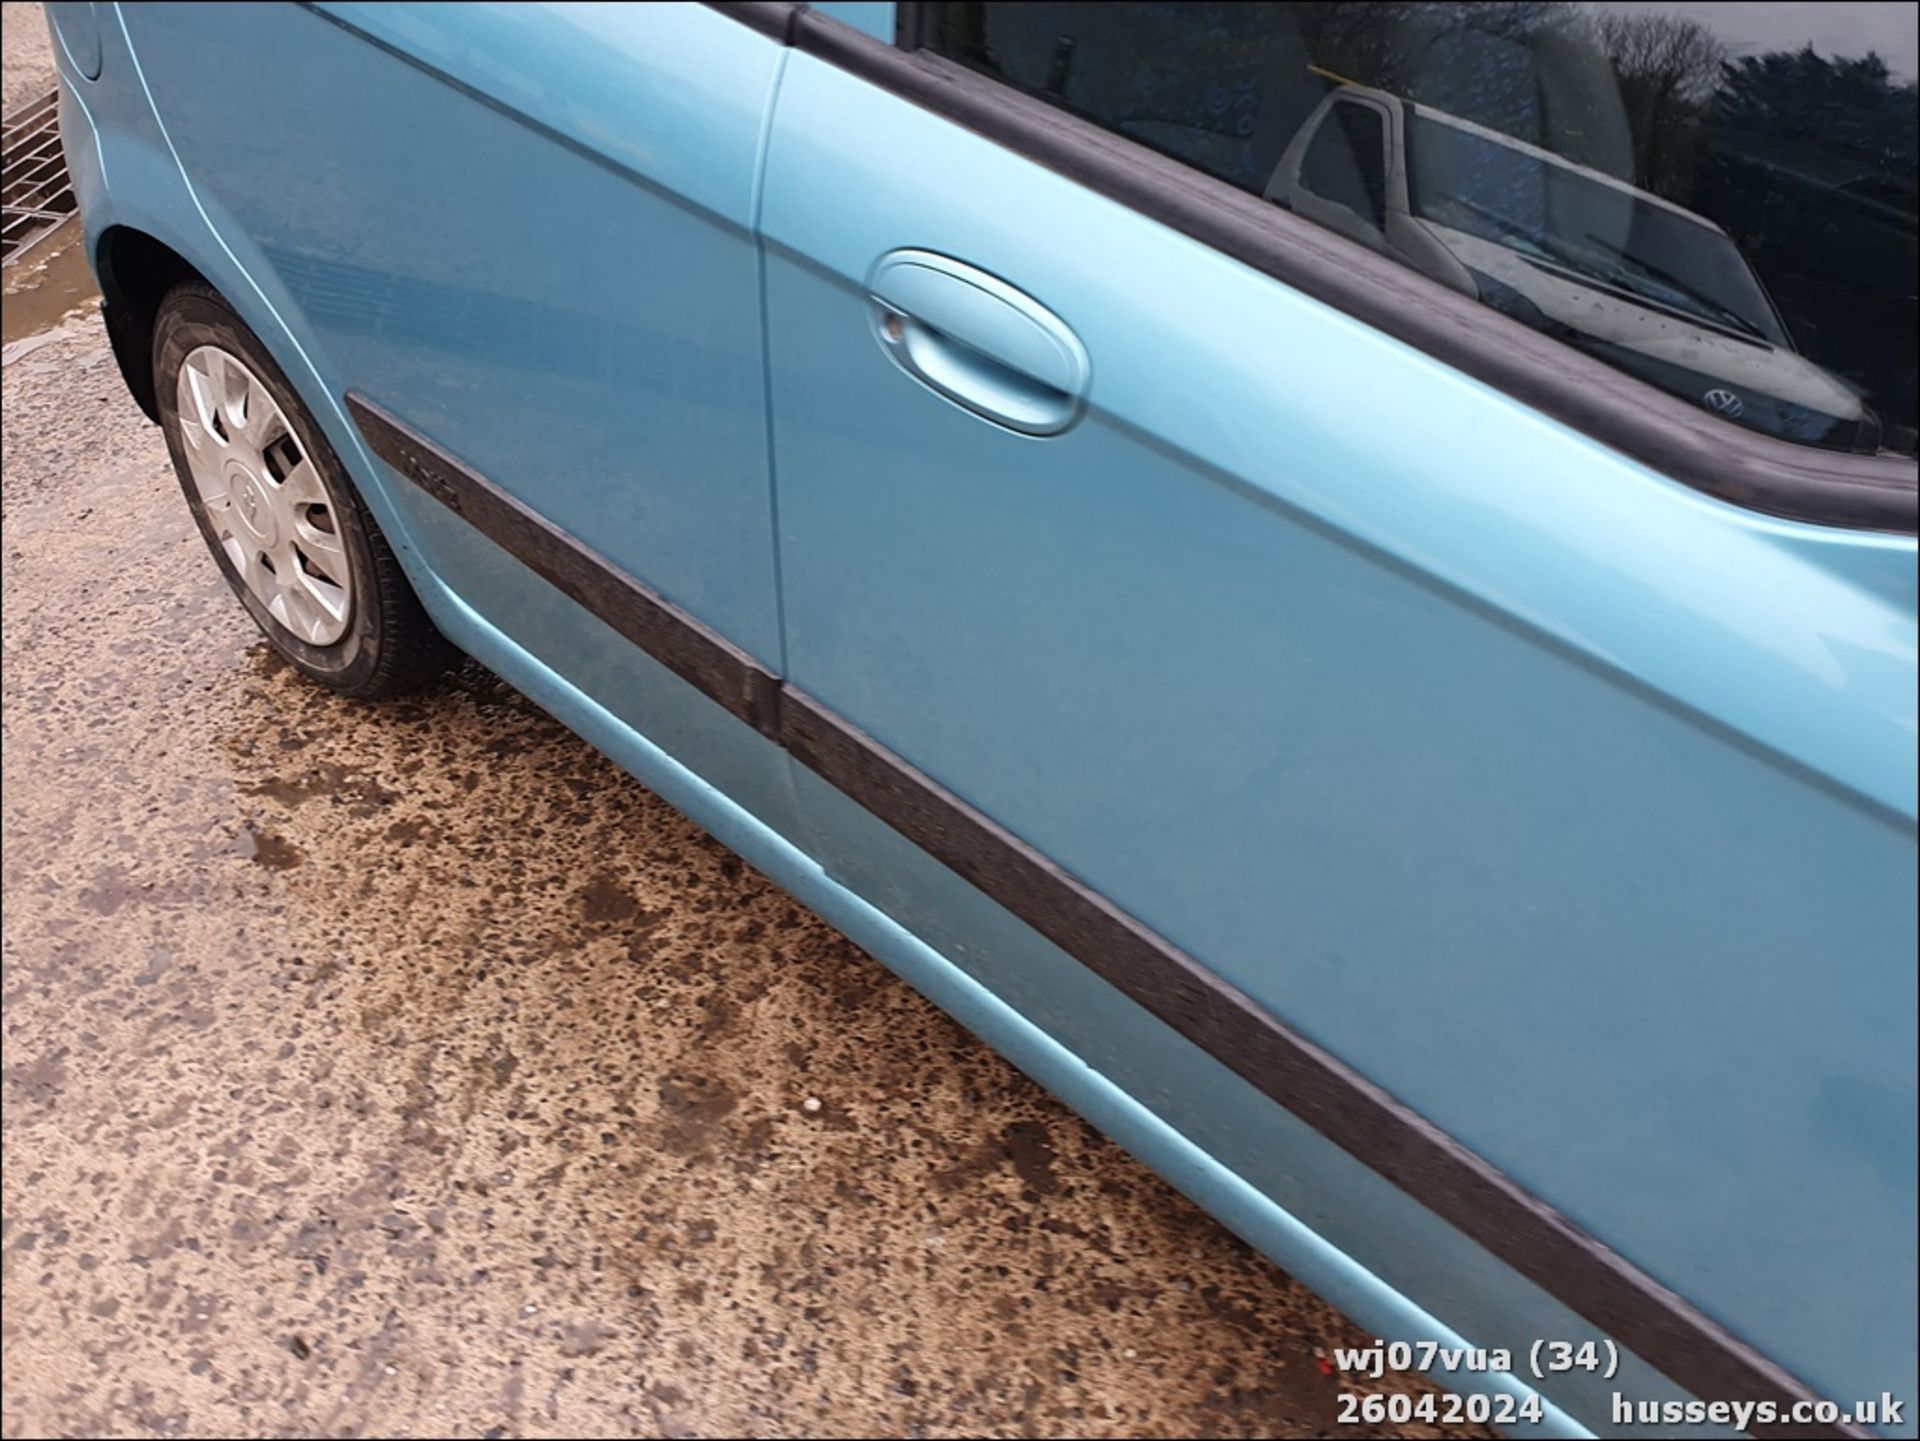 07/07 CHEVROLET MATIZ SE AUTO - 796cc 5dr Hatchback (Blue, 36k) - Image 35 of 56